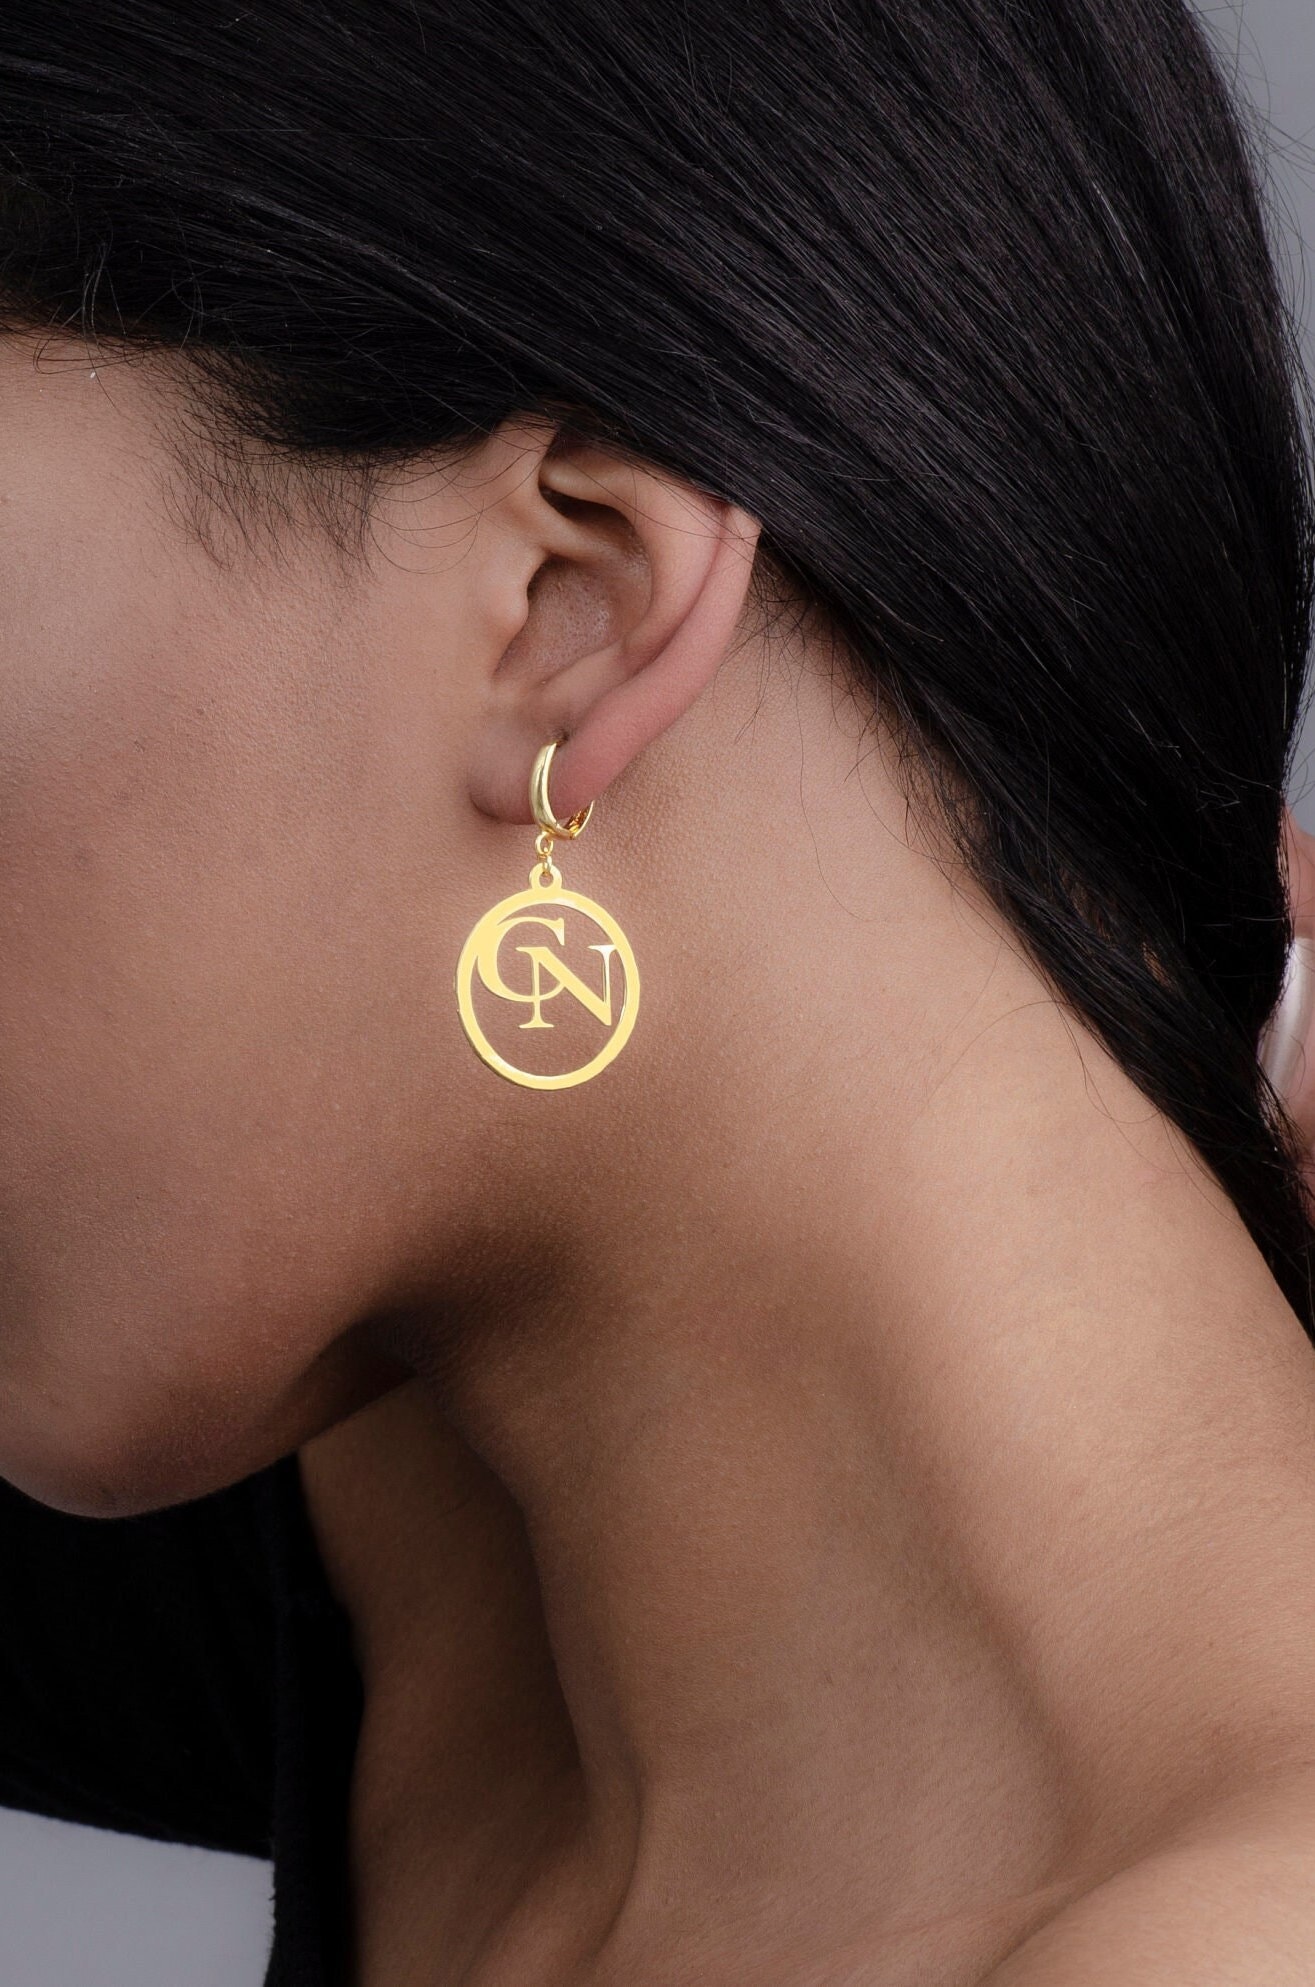 Personalized Gold Earring with Initials, Dainty Letter Earrings, Hoop Earrings Halloween Jewelry